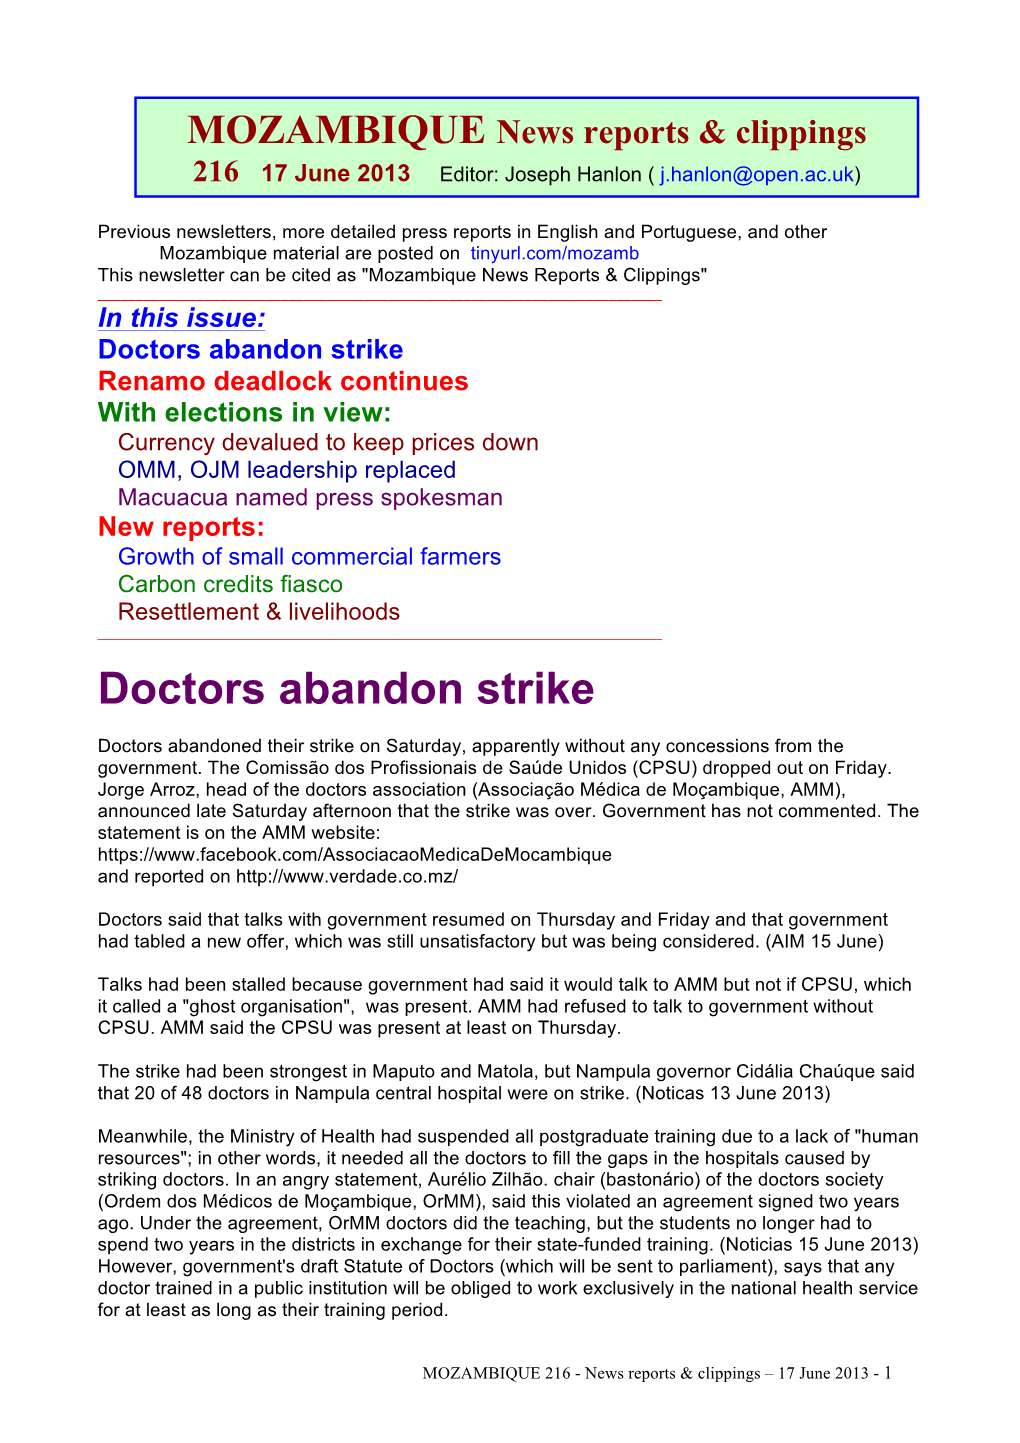 Doctors Abandon Strike